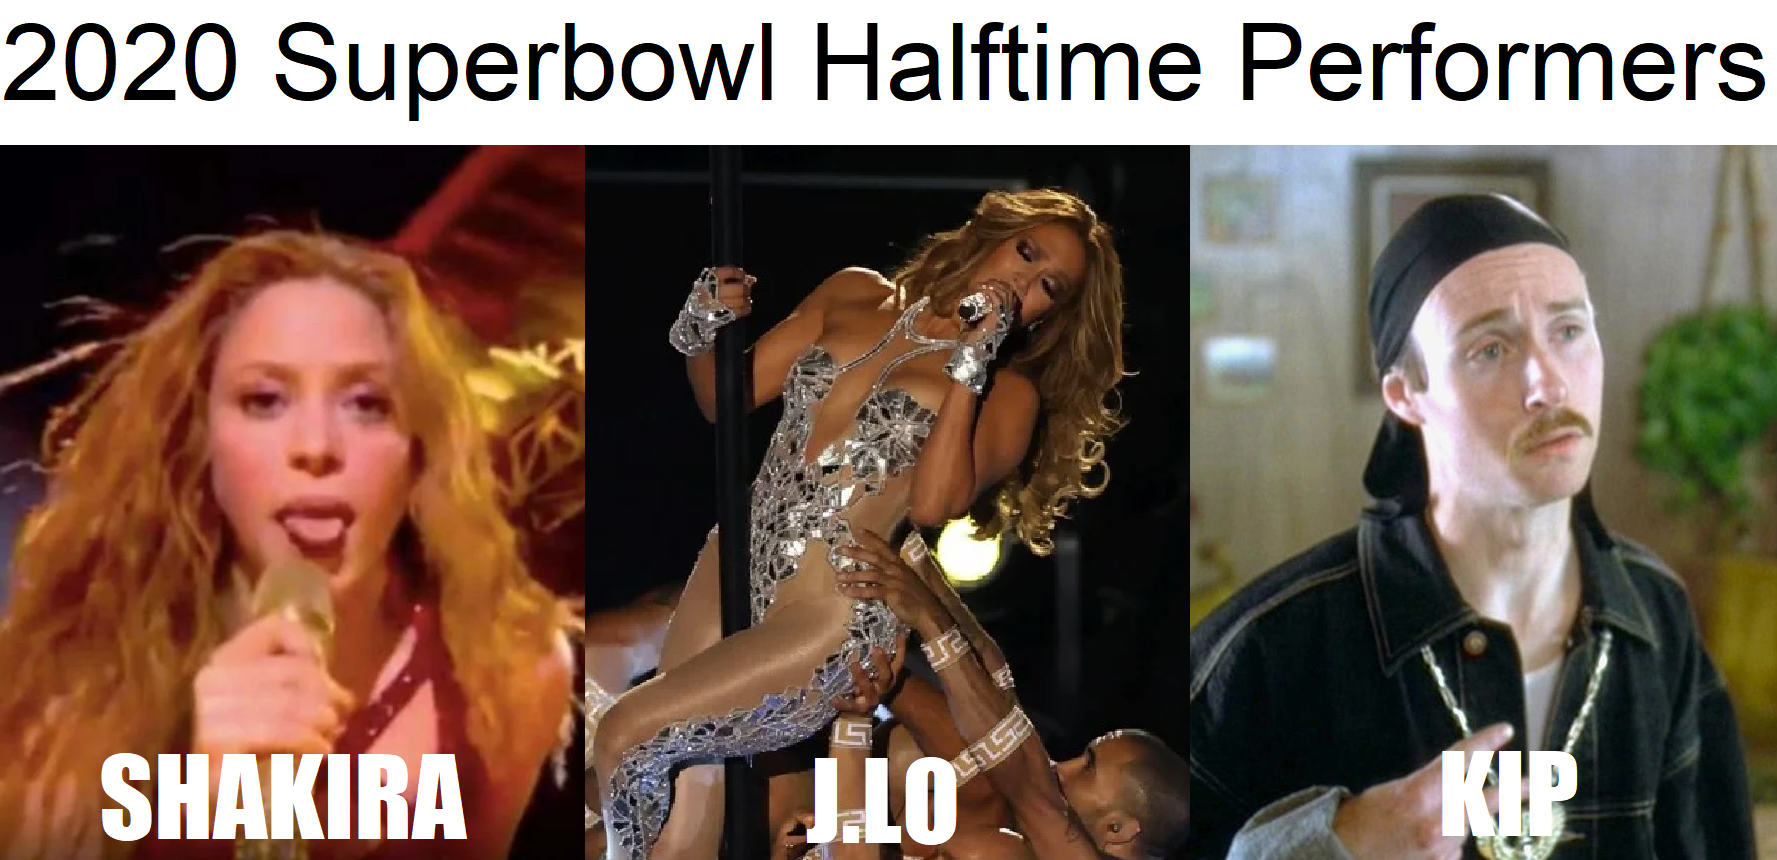 photo caption - 2020 Superbowl Halftime Performers Shakira